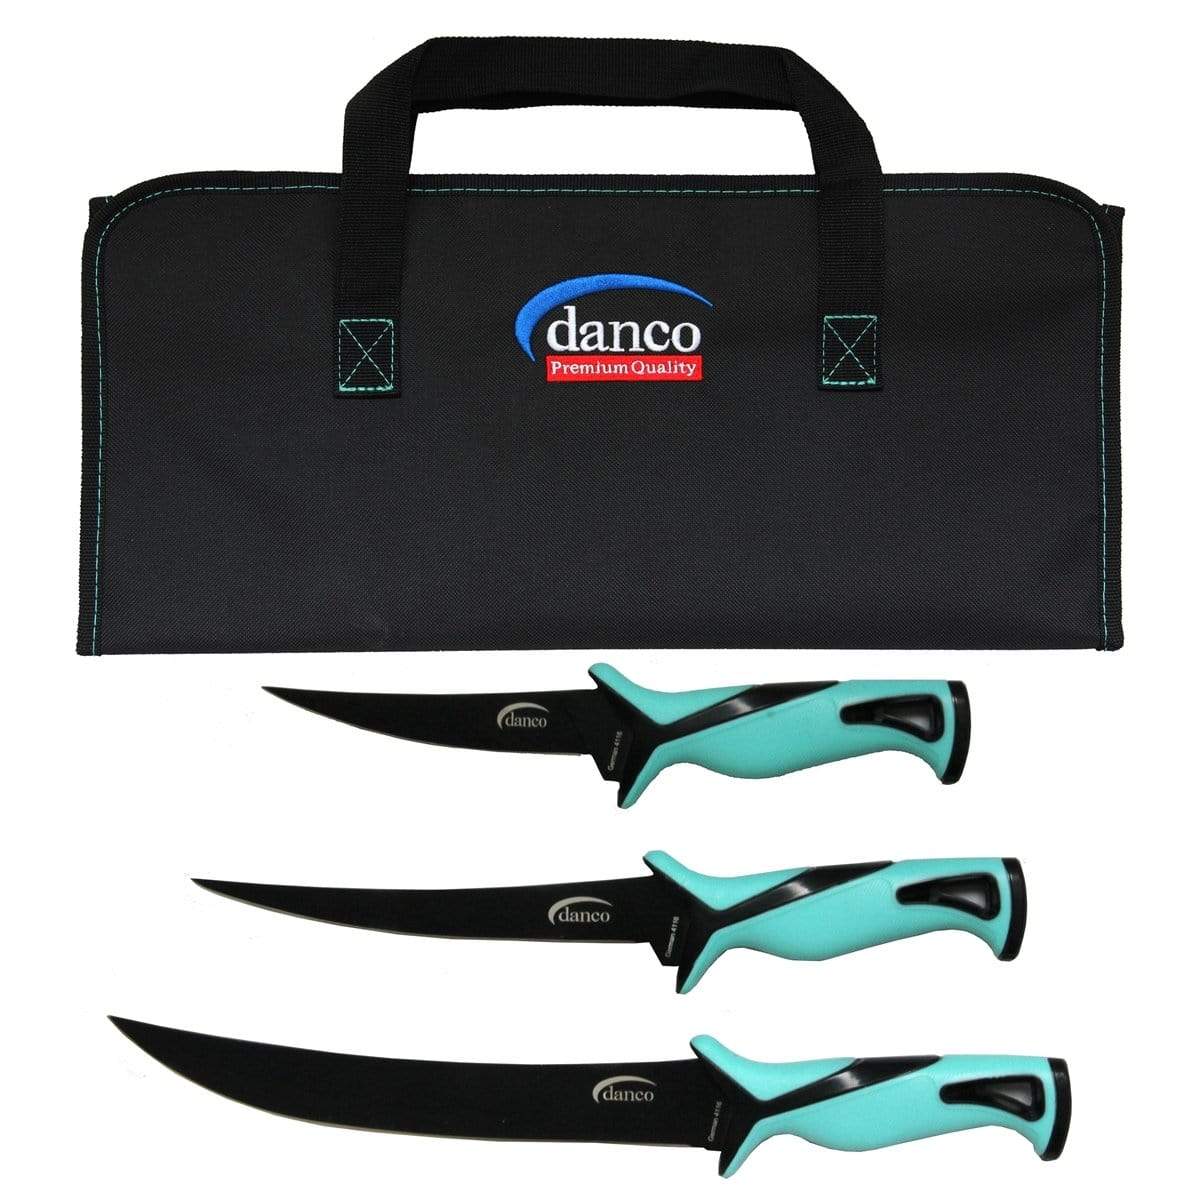 Danco Pro Series Roll Up Bag Kit Seafoam